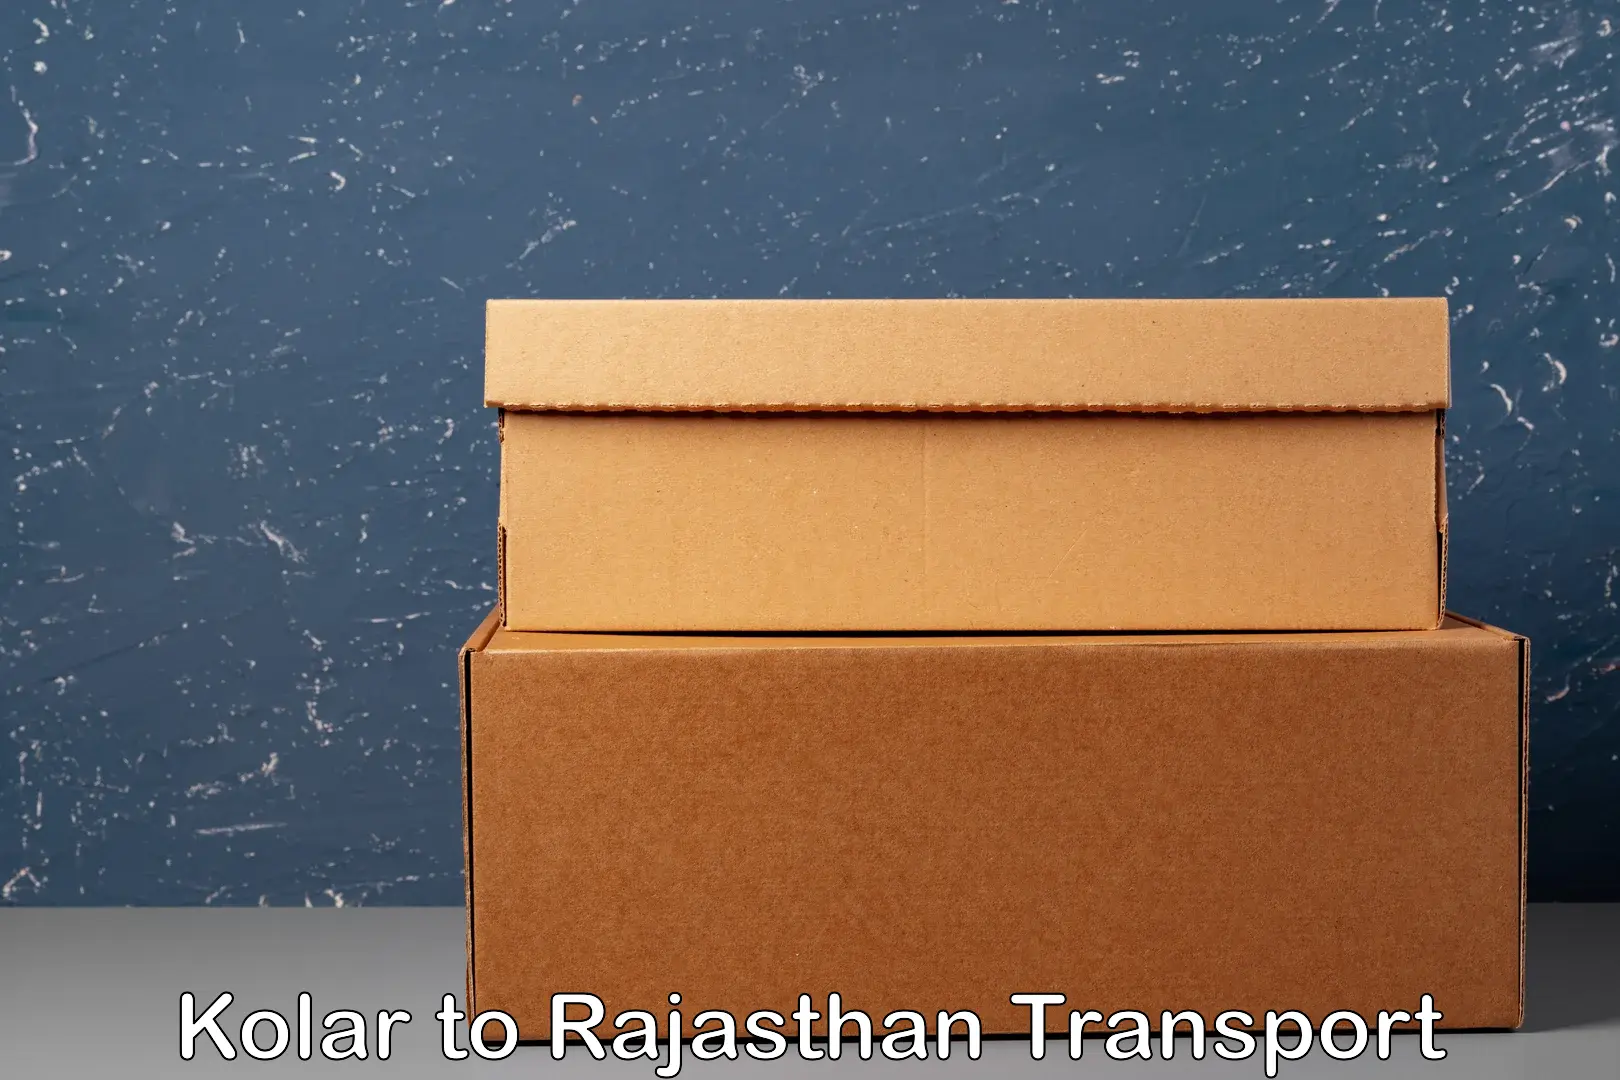 Truck transport companies in India Kolar to Rajasthan